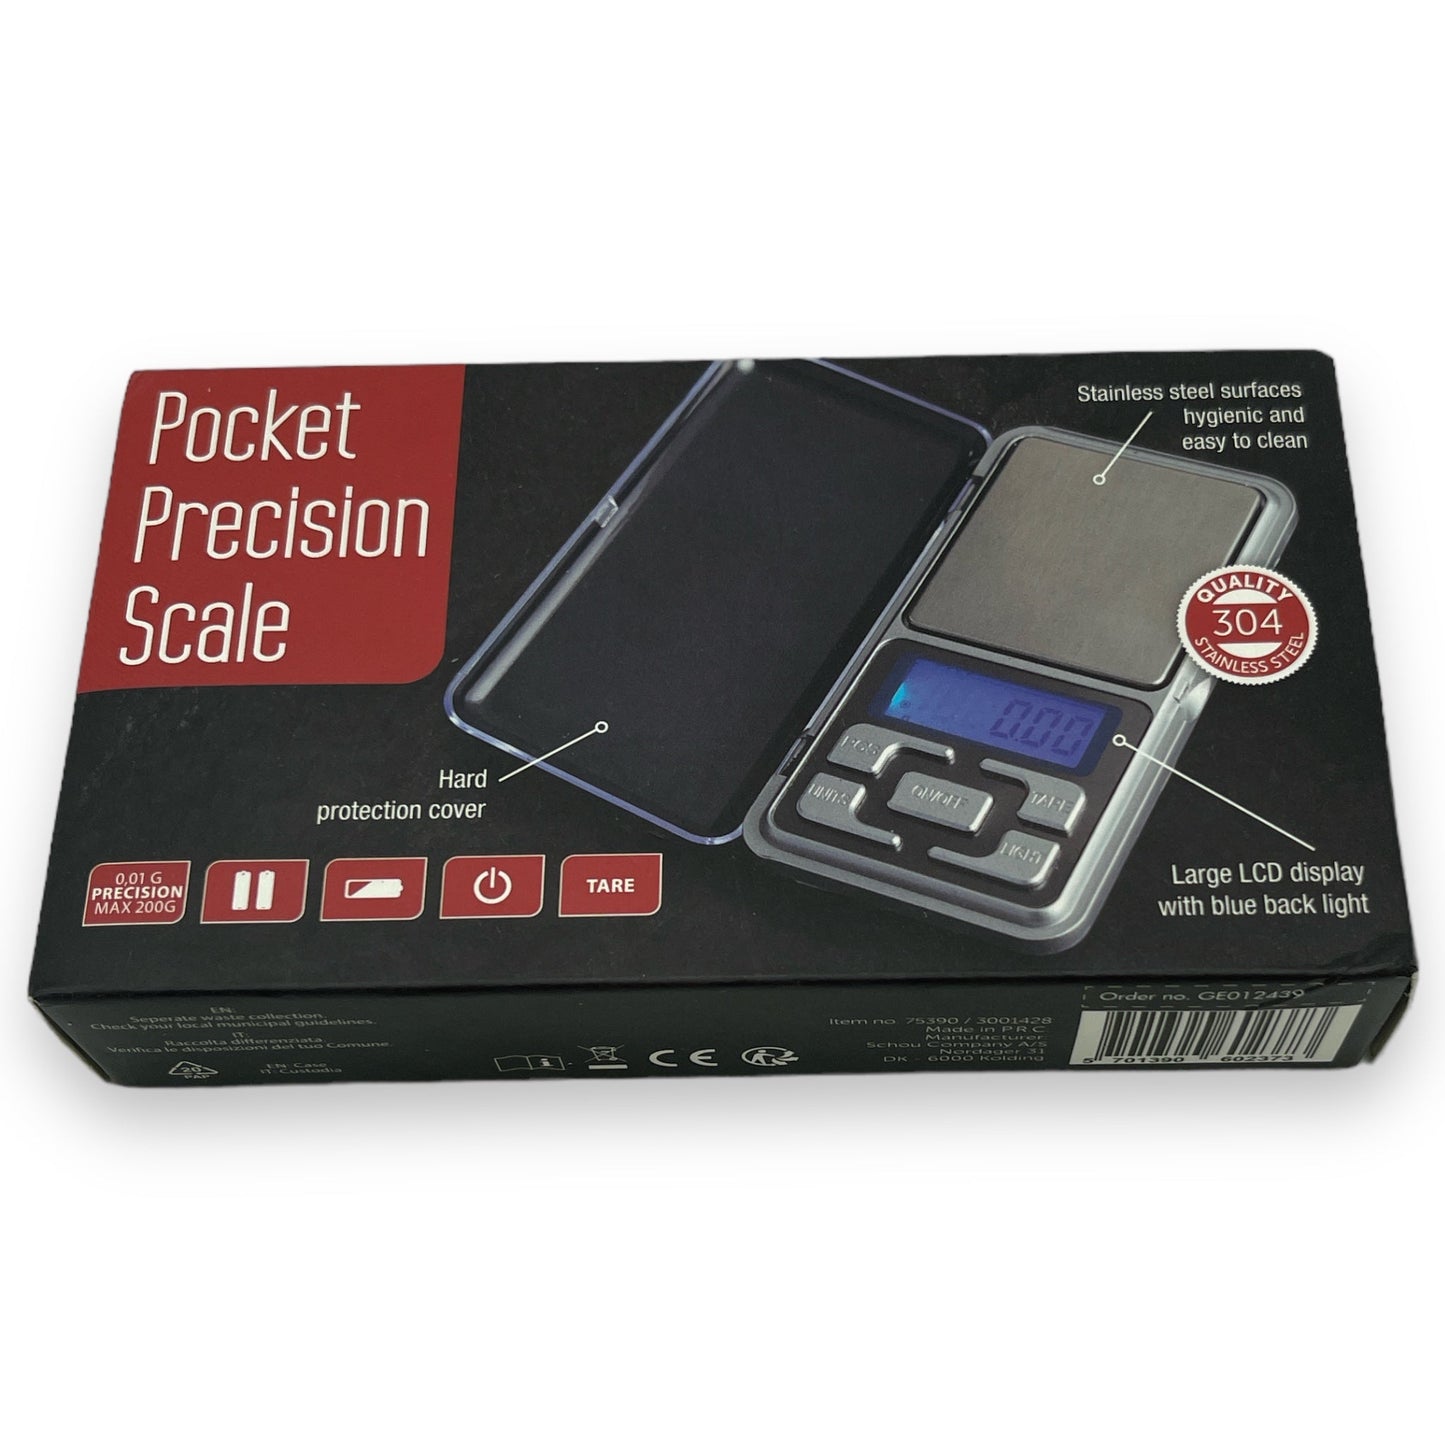 Mini Pocket Precisie Weegschaal - Meet met Nauwkeurigheid en Gemak